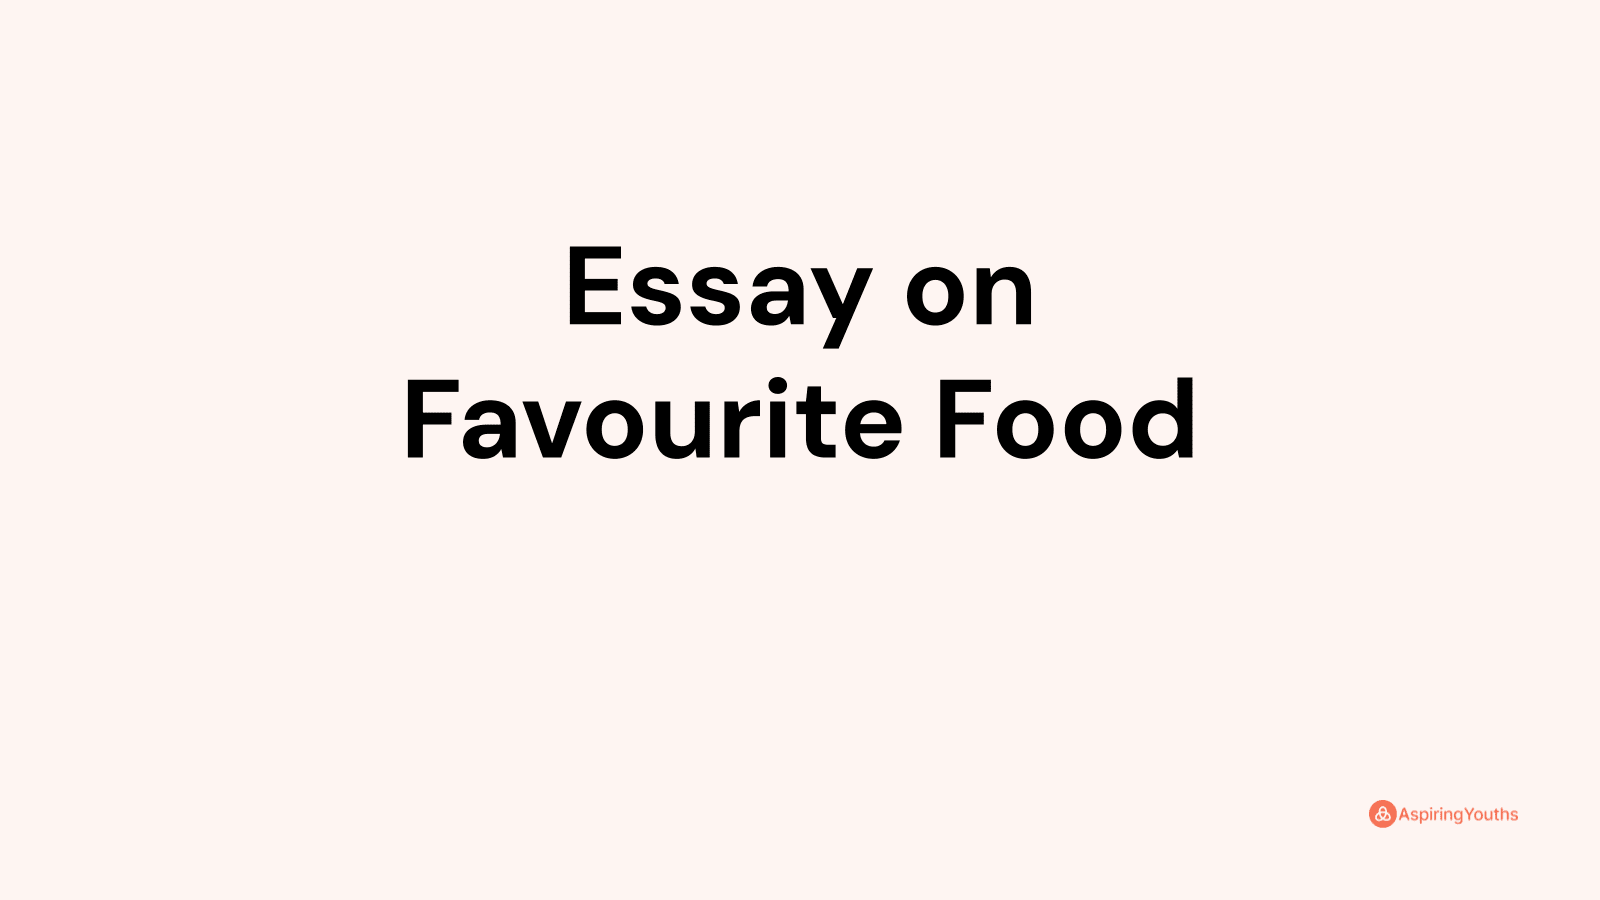 Essay on Favourite Food